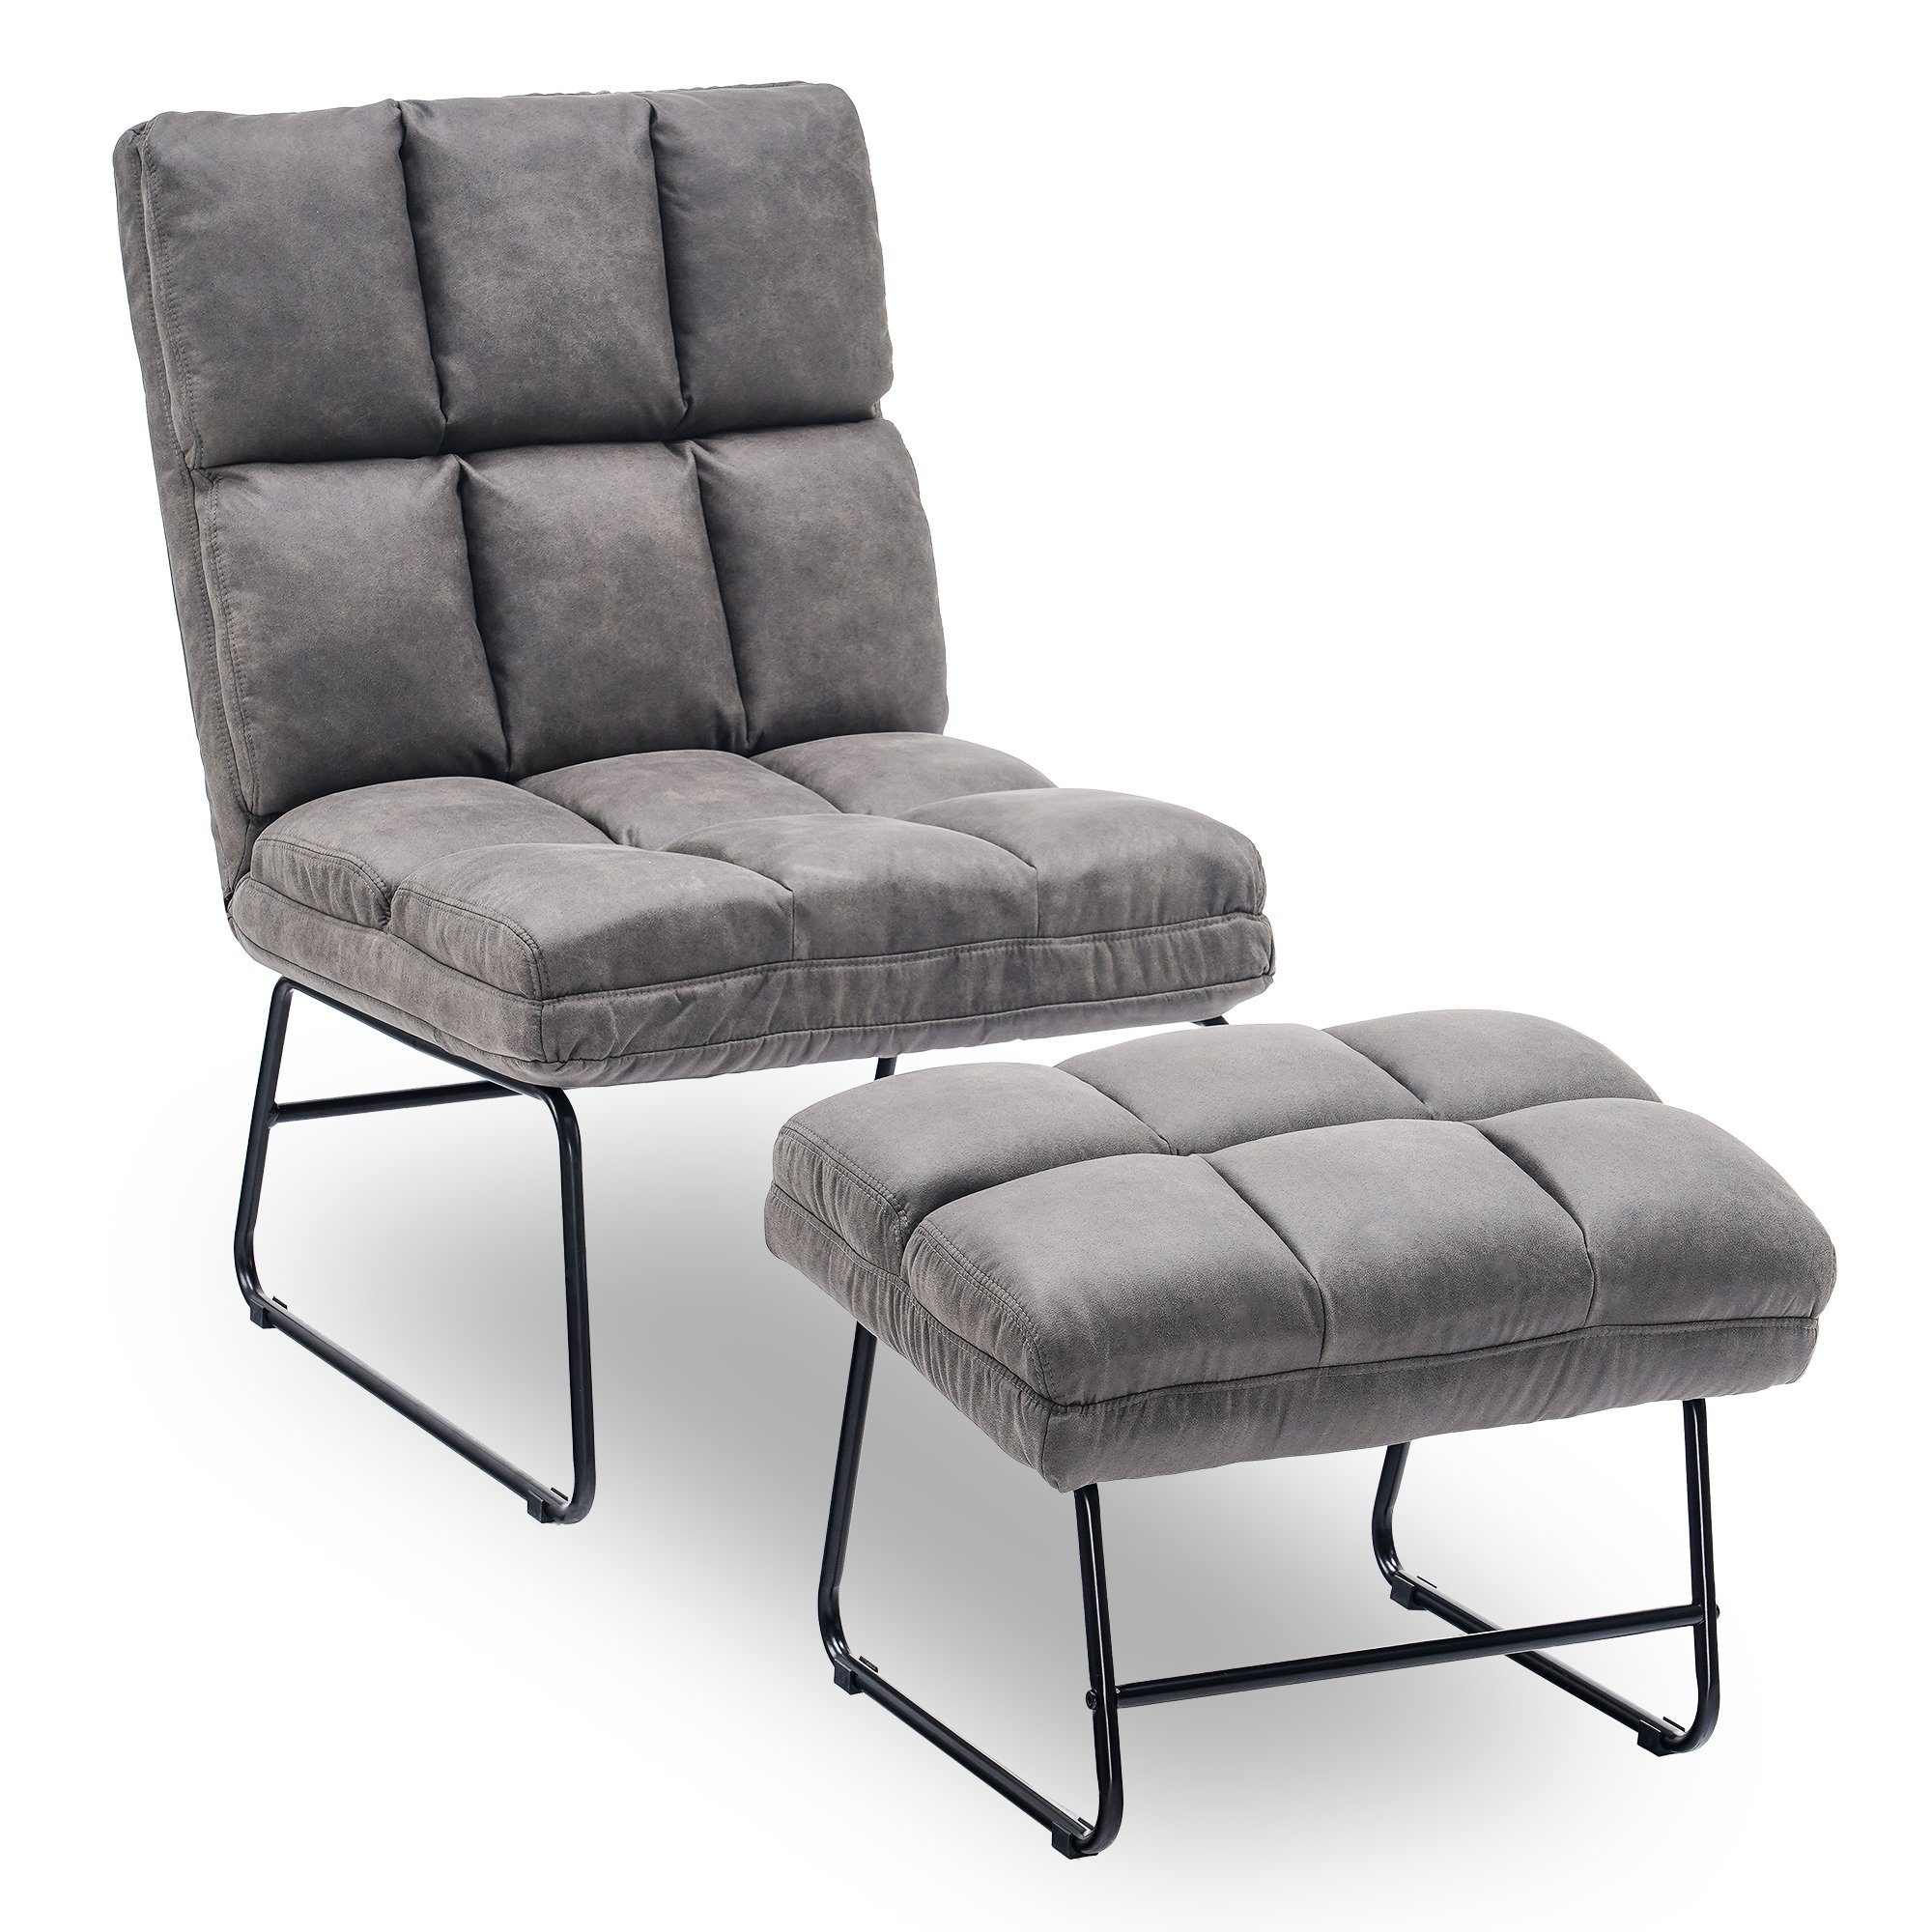 Fernsehsessel Loungesessel moderner Relaxsessel Stuhl MCombo 0016, Wohnzimmer, Sessel mit / MCombo TV-Sessel Hocker 0014 für